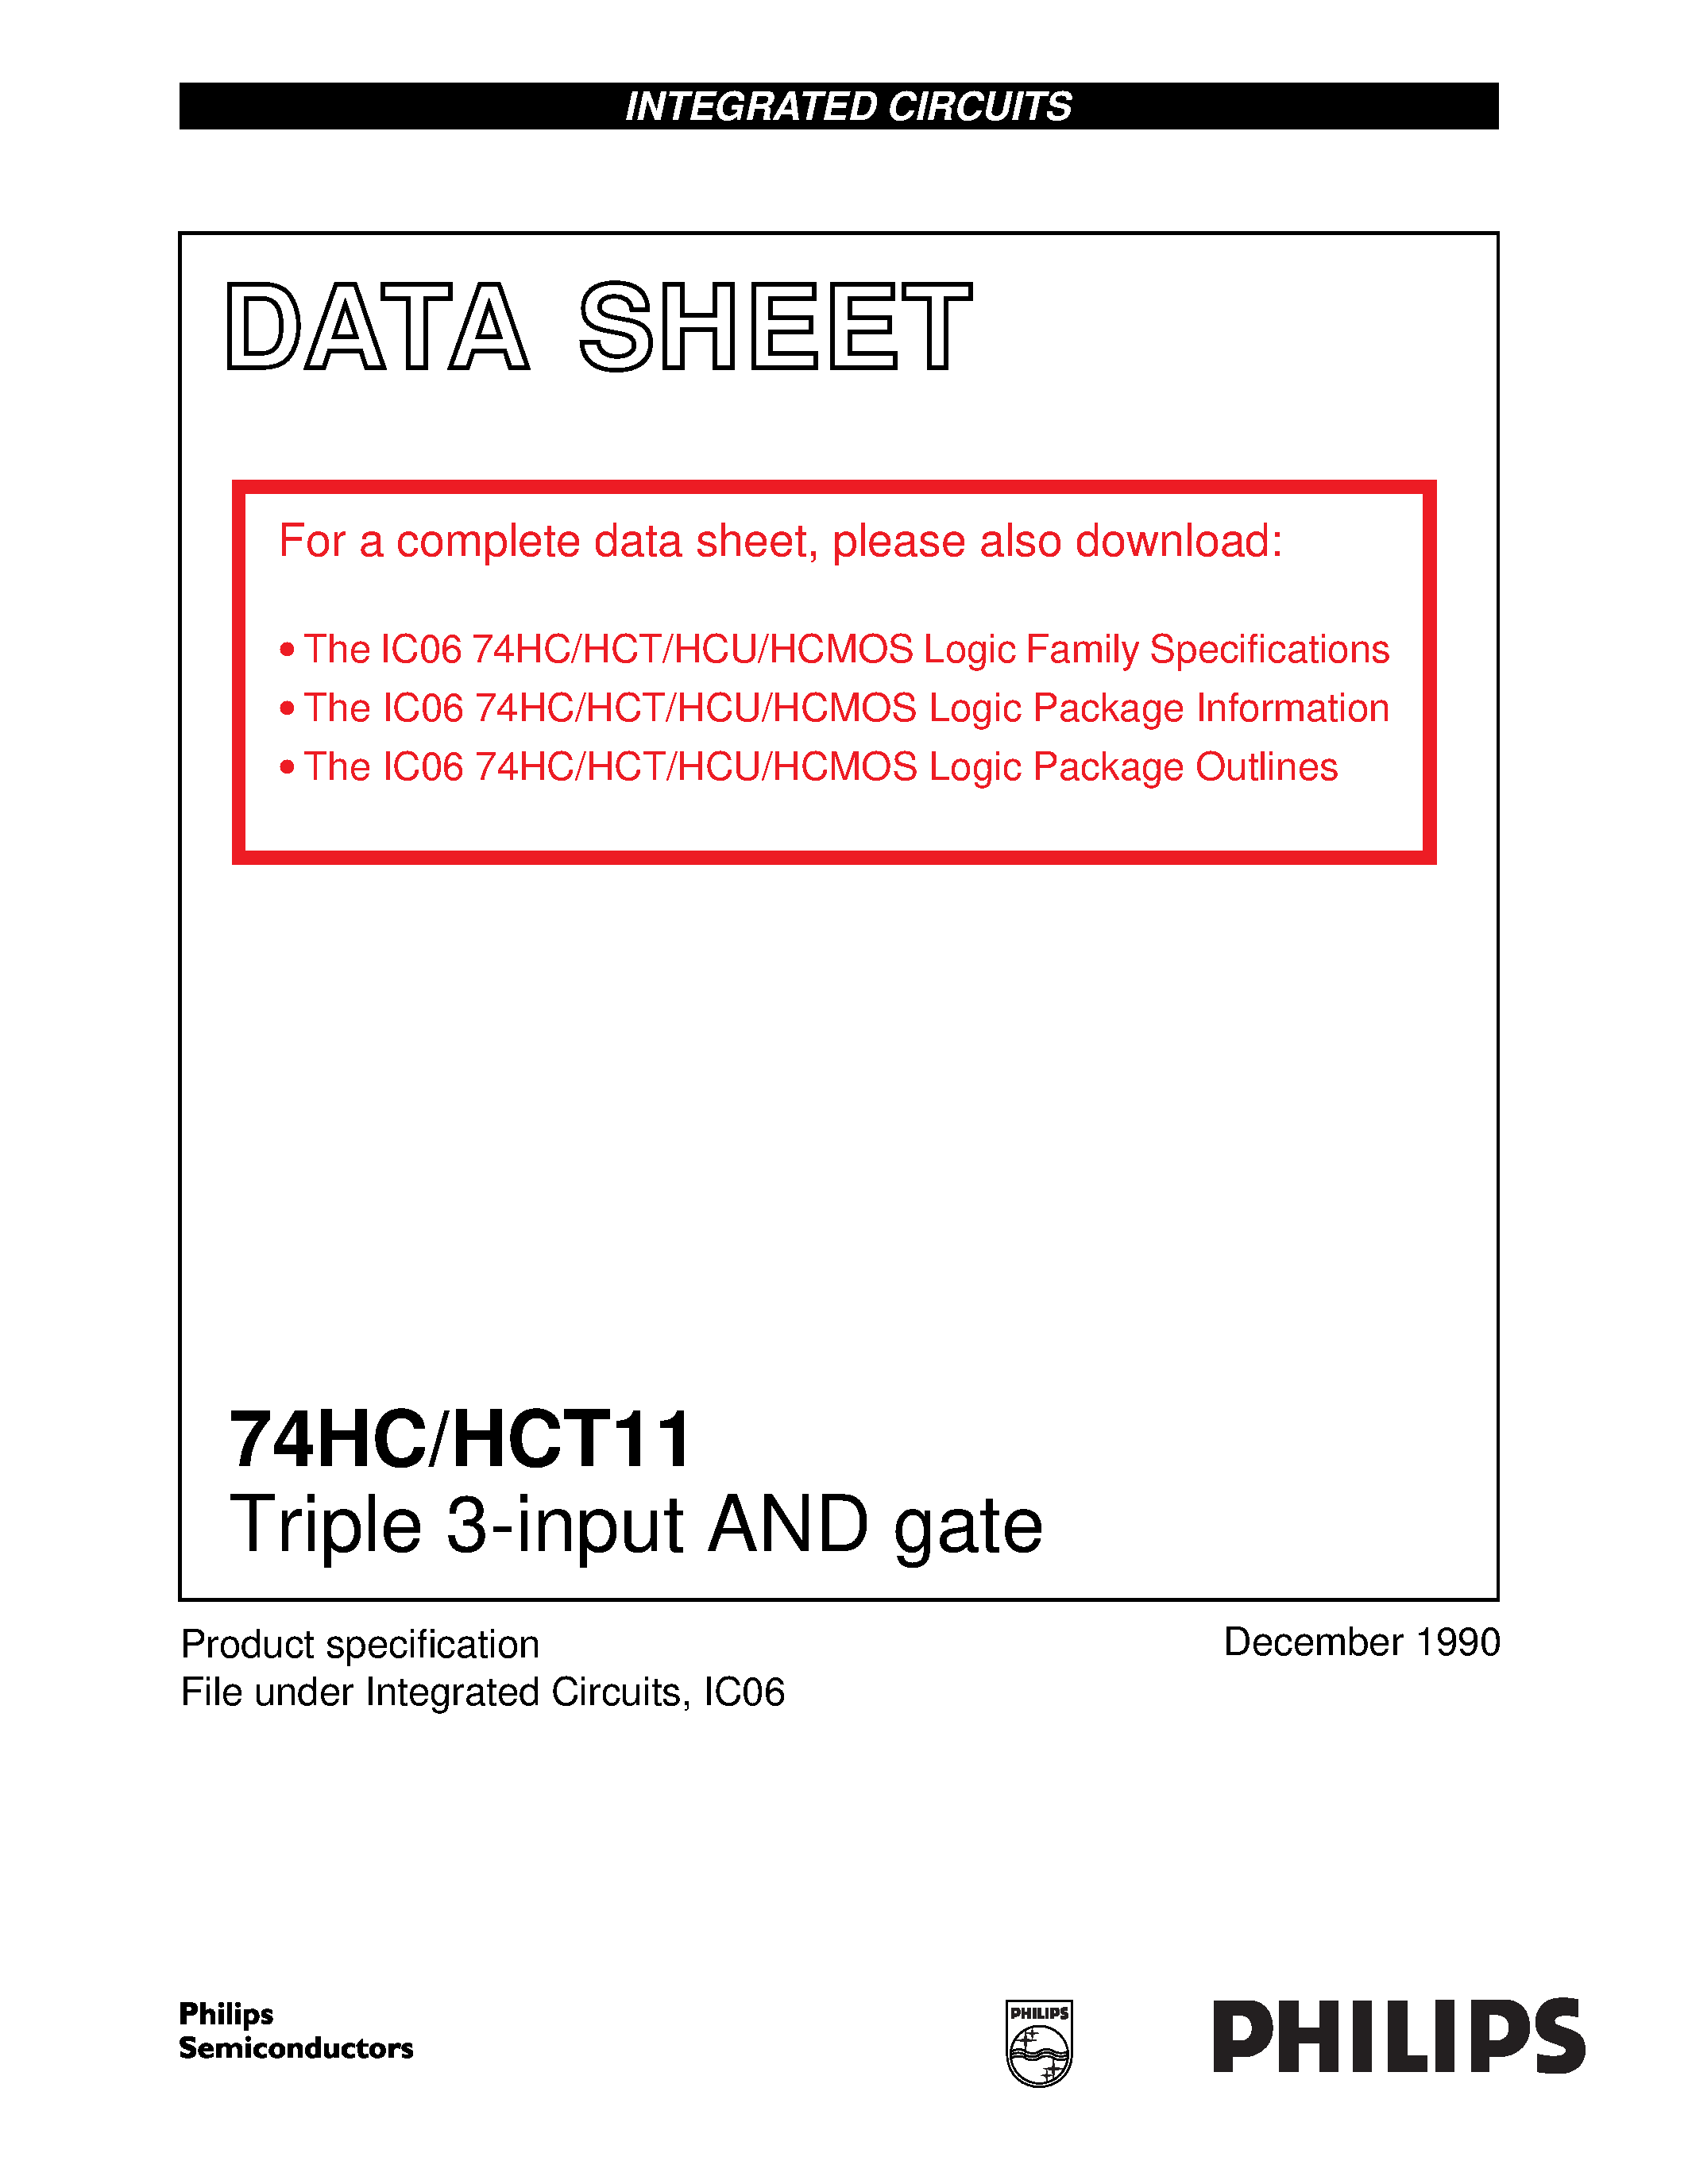 Даташит 74HCT11 - Triple 3-input AND gate страница 1